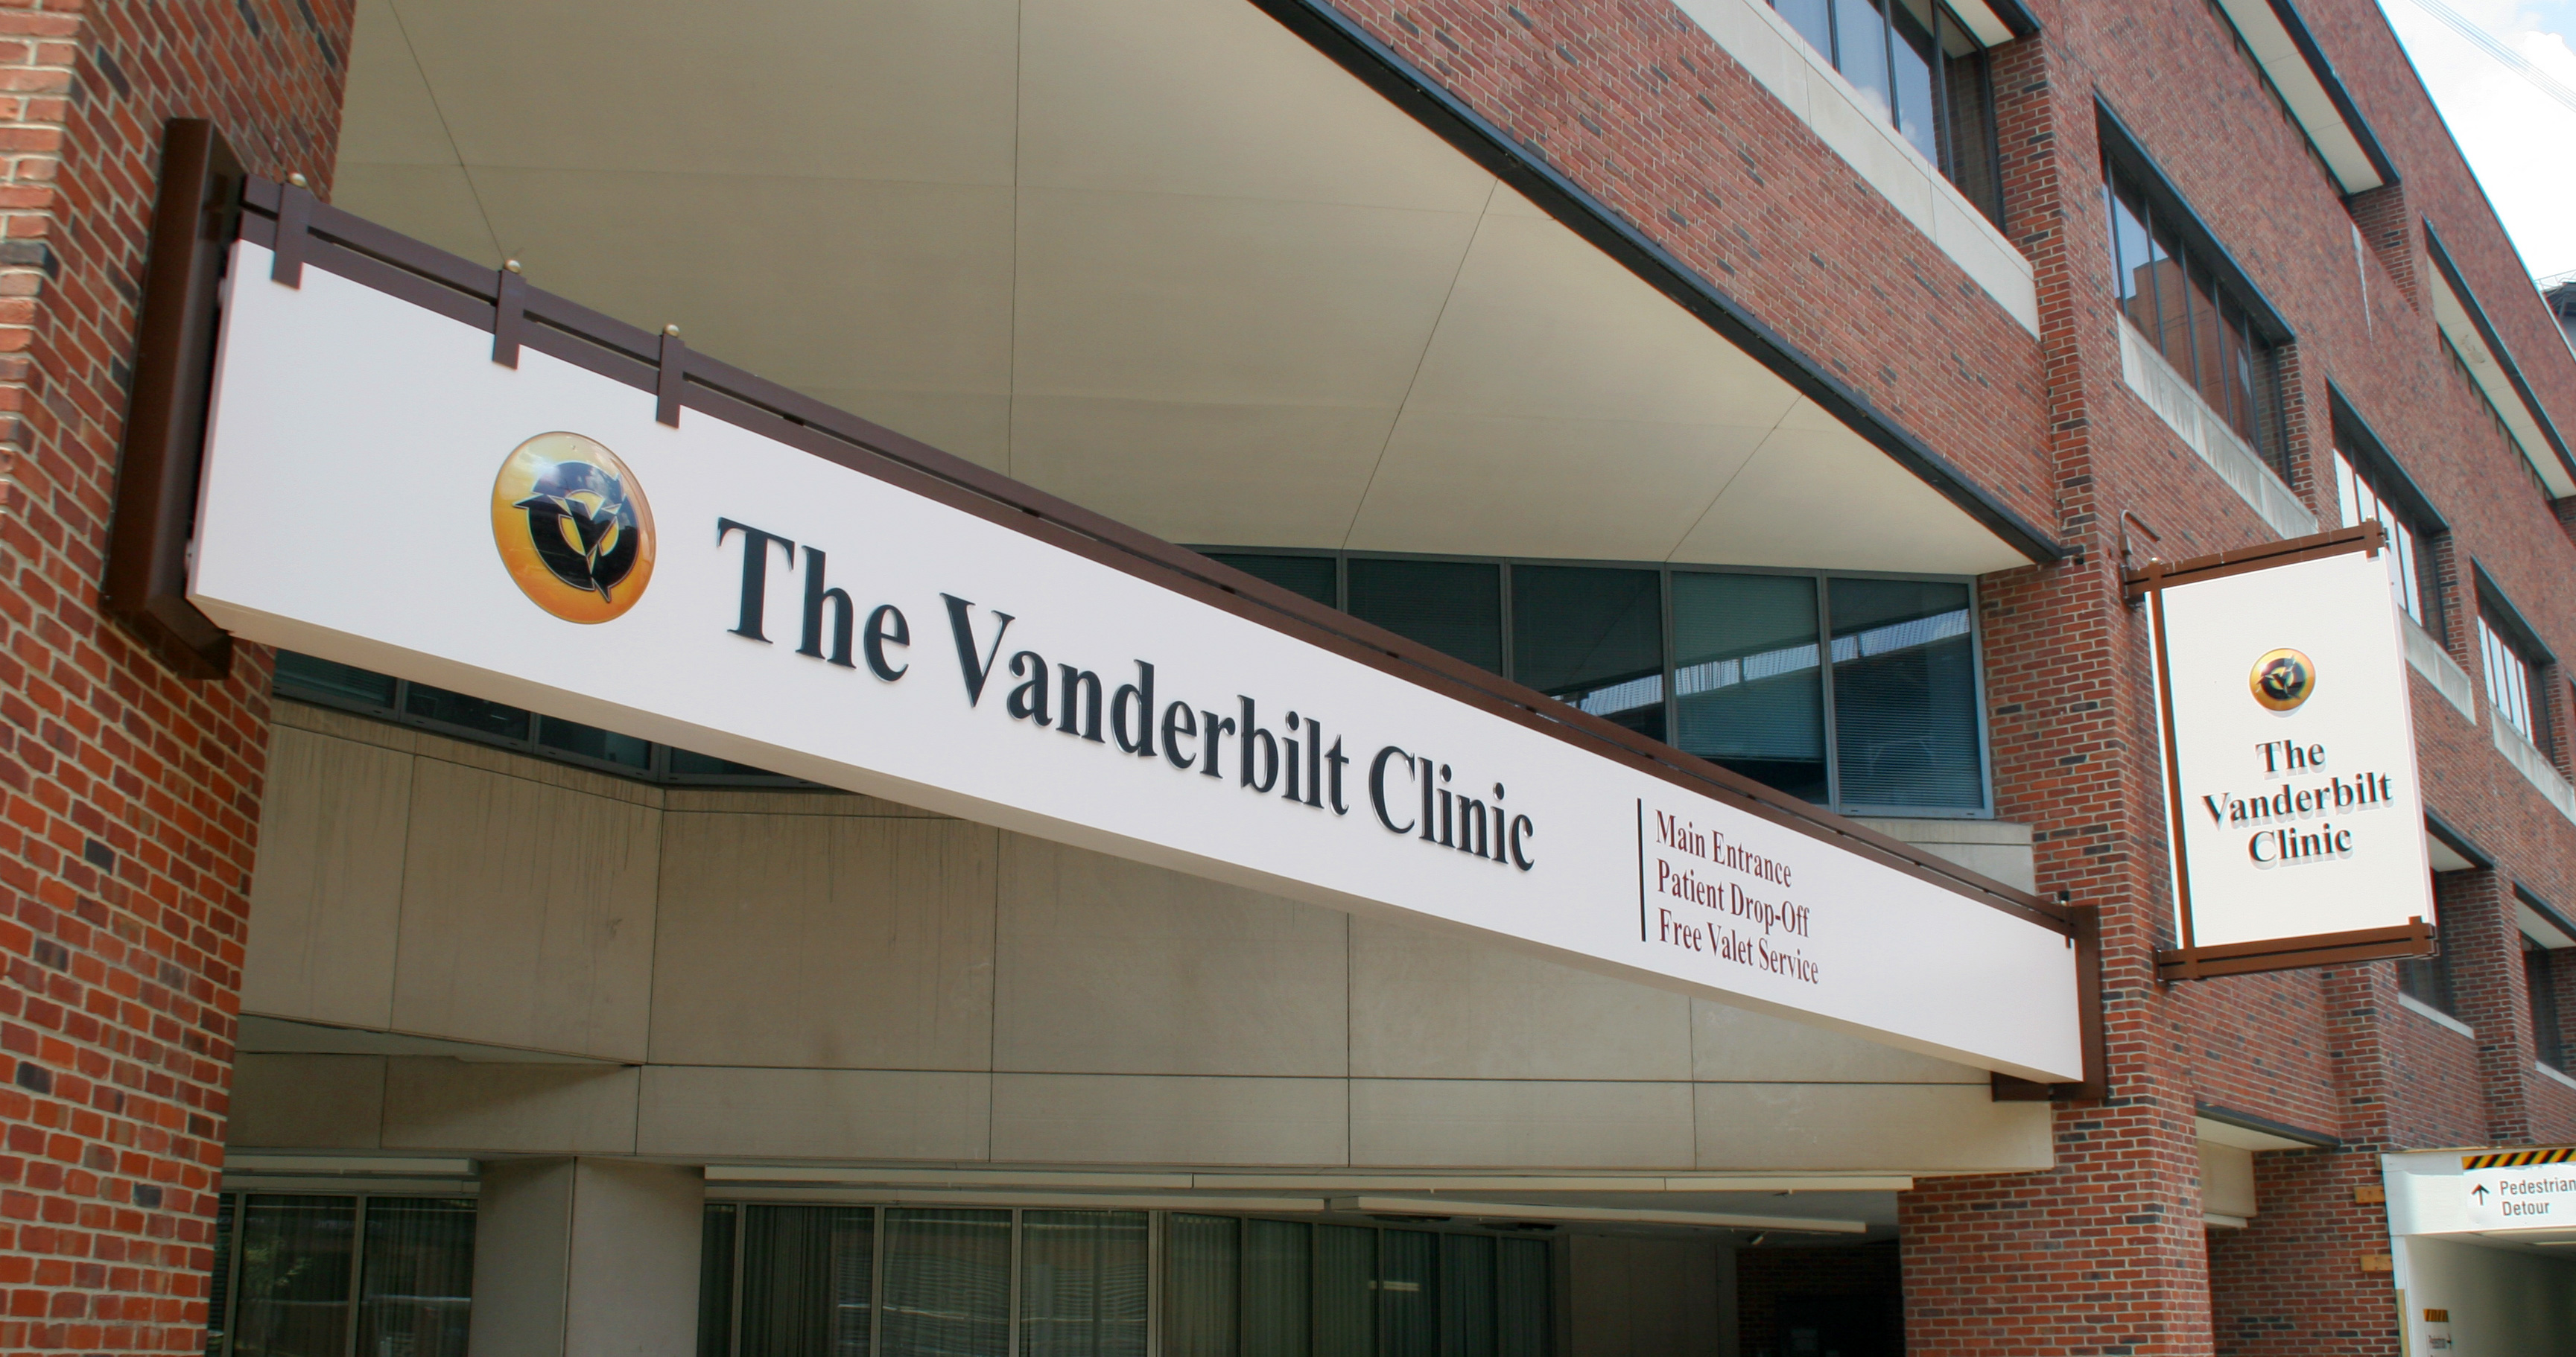 The Vanderbilt Clinic Drive-through entrance